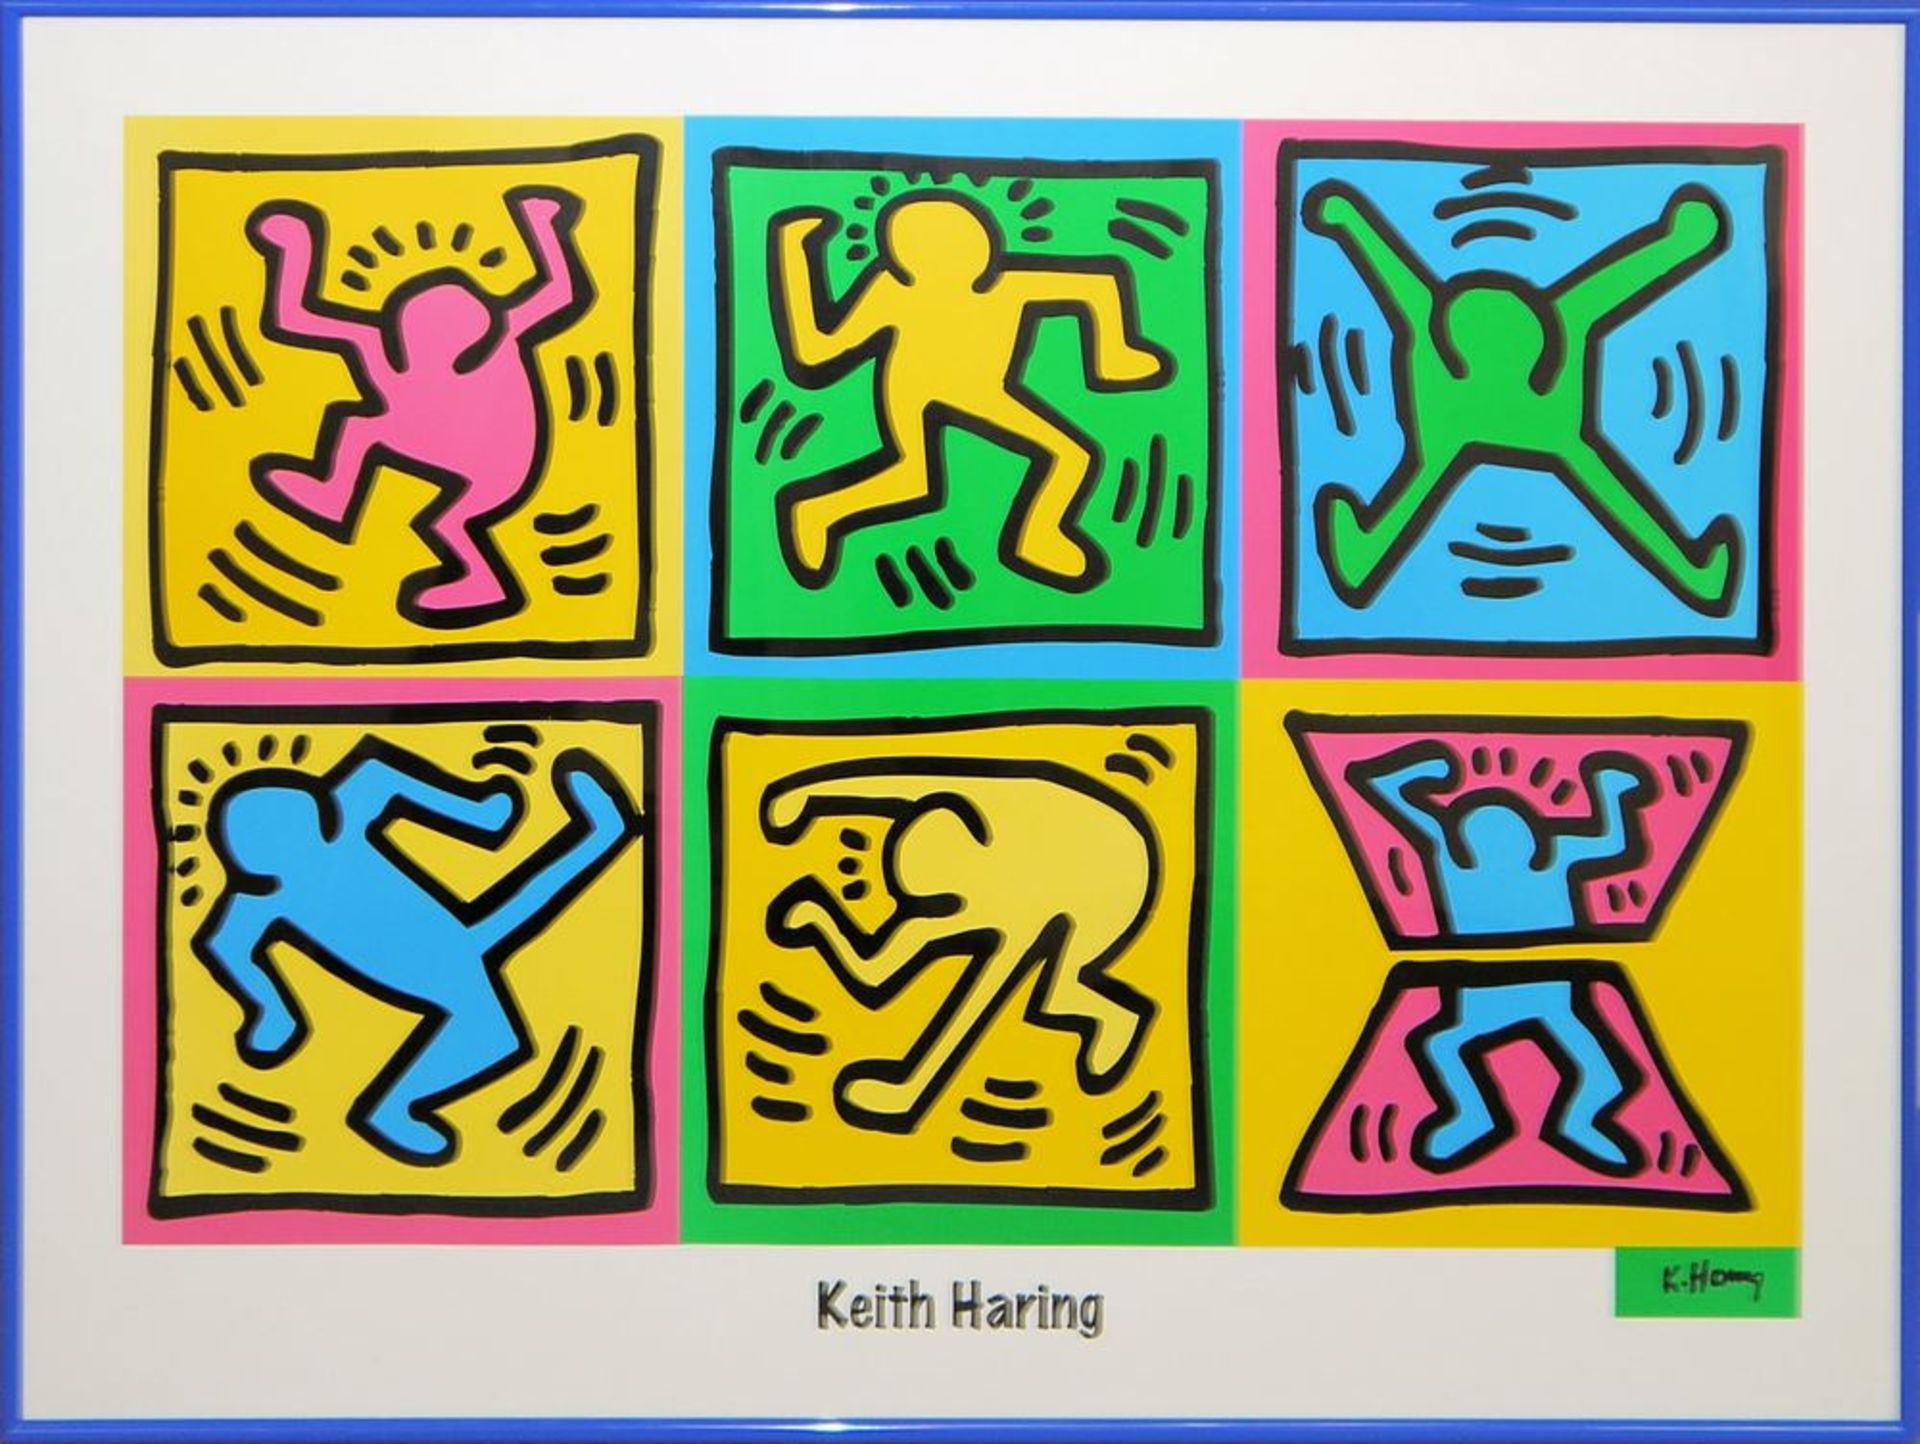 Keith Haring, "Six dancing people", Farbserigraphie von 1990 & "Wedding invitation", Offset auf